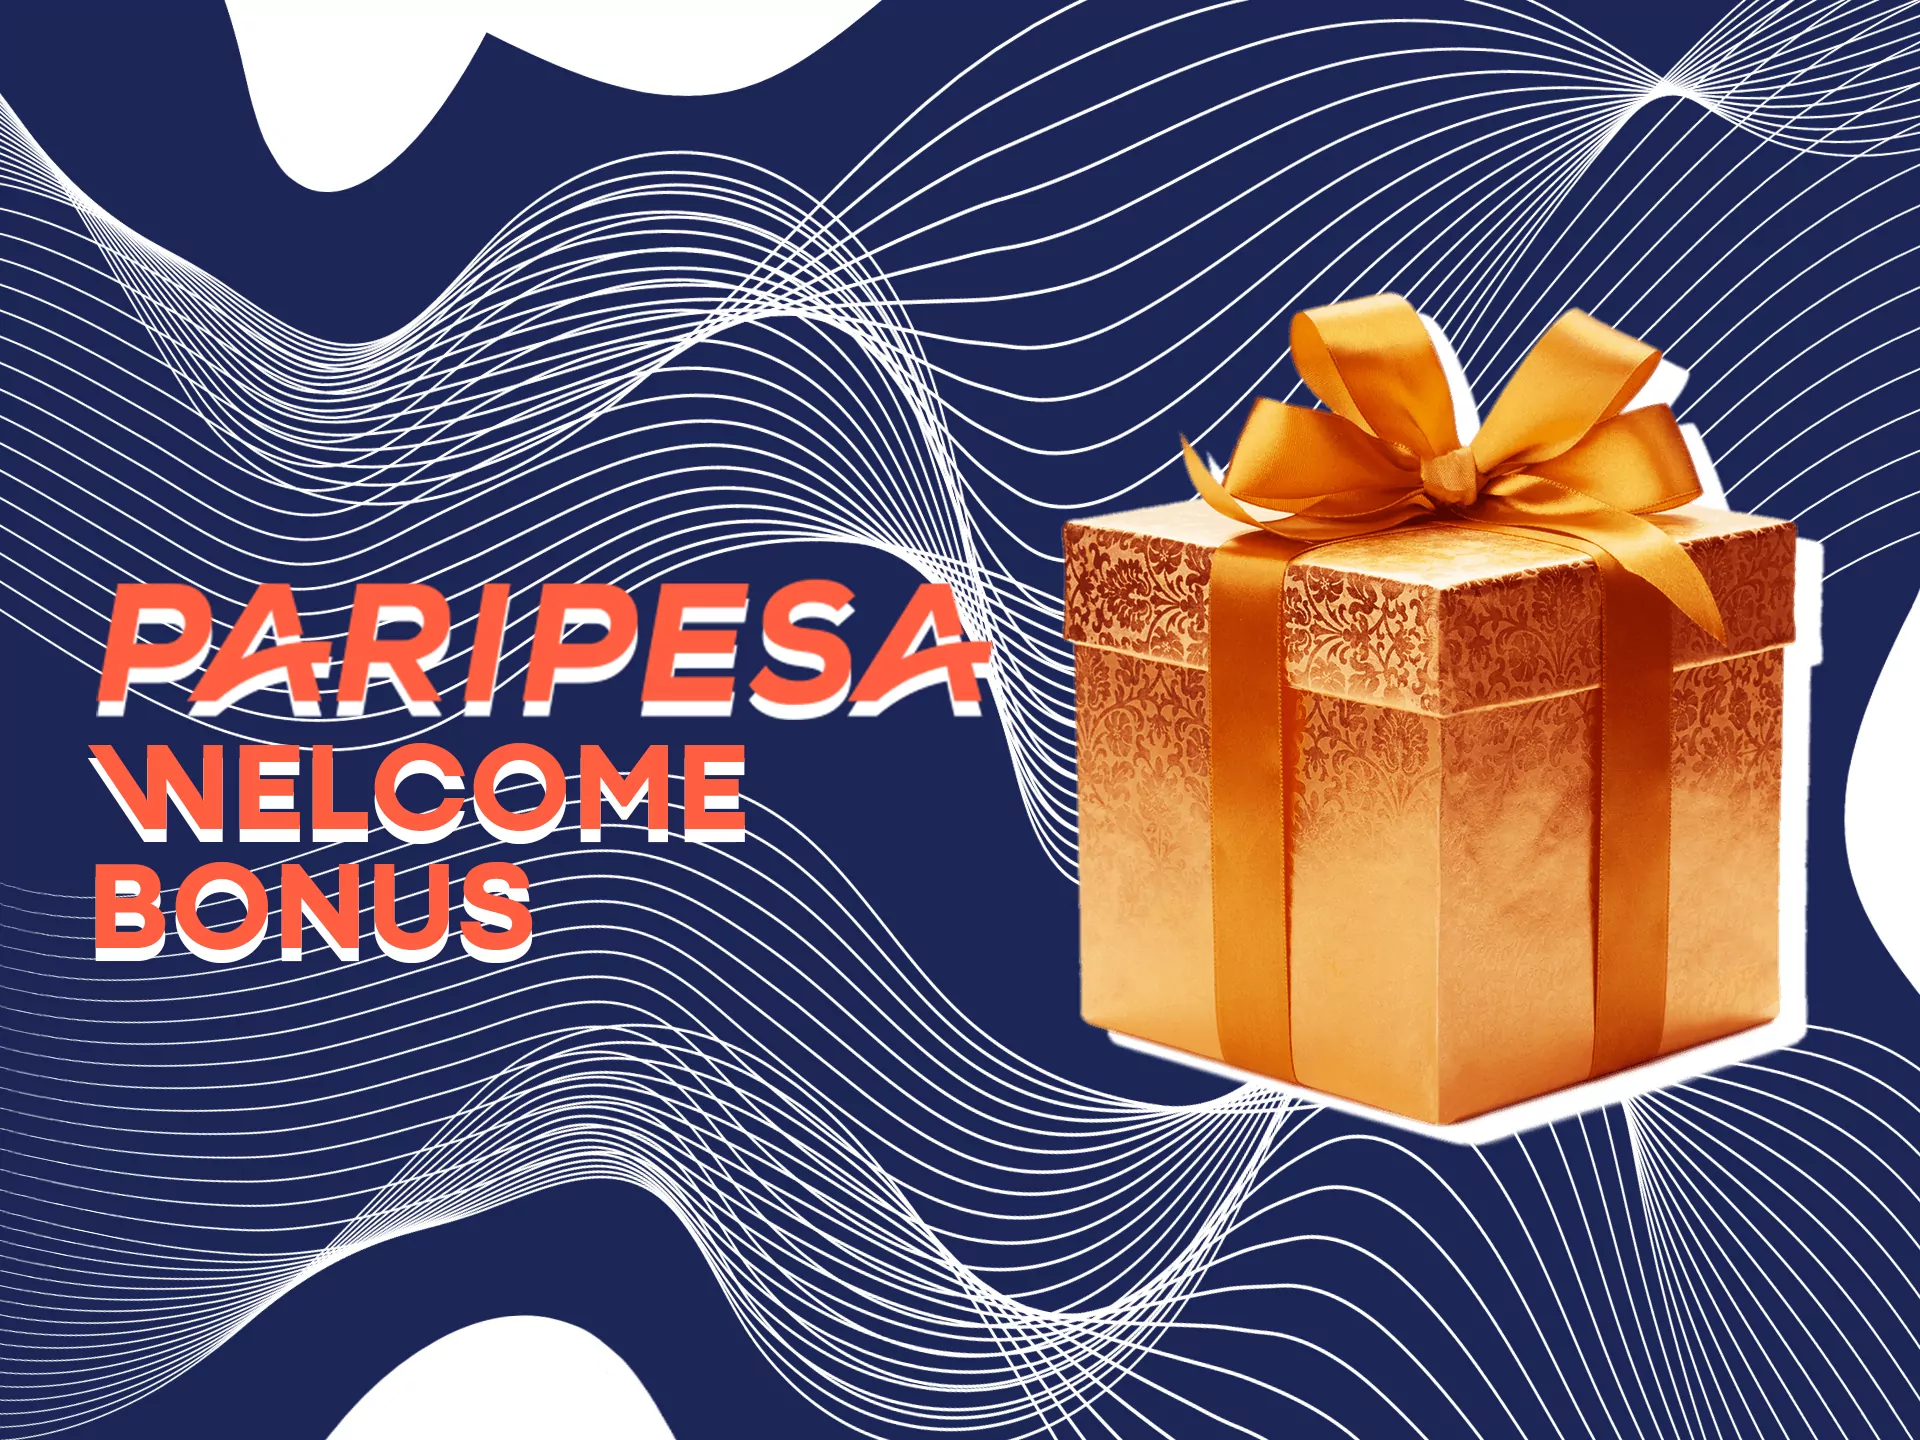 Get welcome bonus at Paripesa for first deposit.